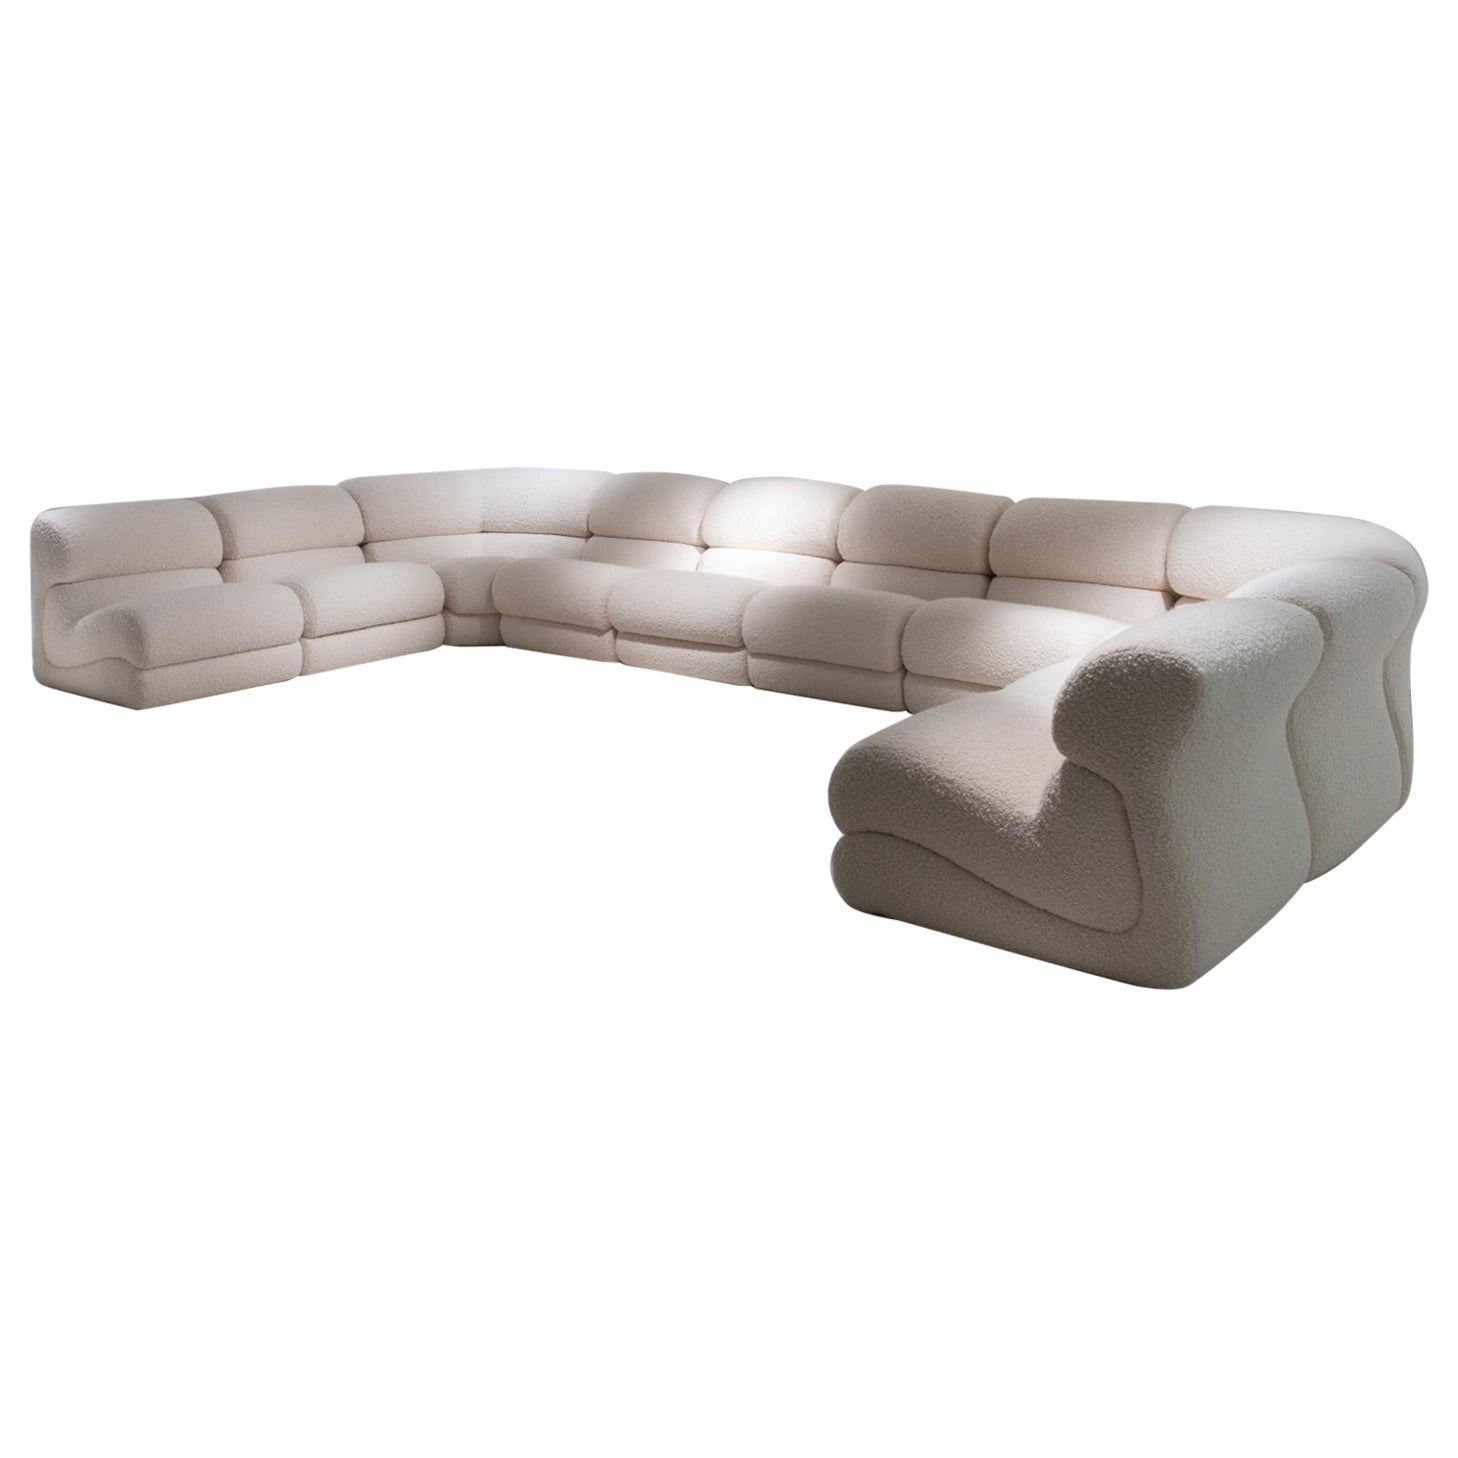 Modular sofa by G.rossi